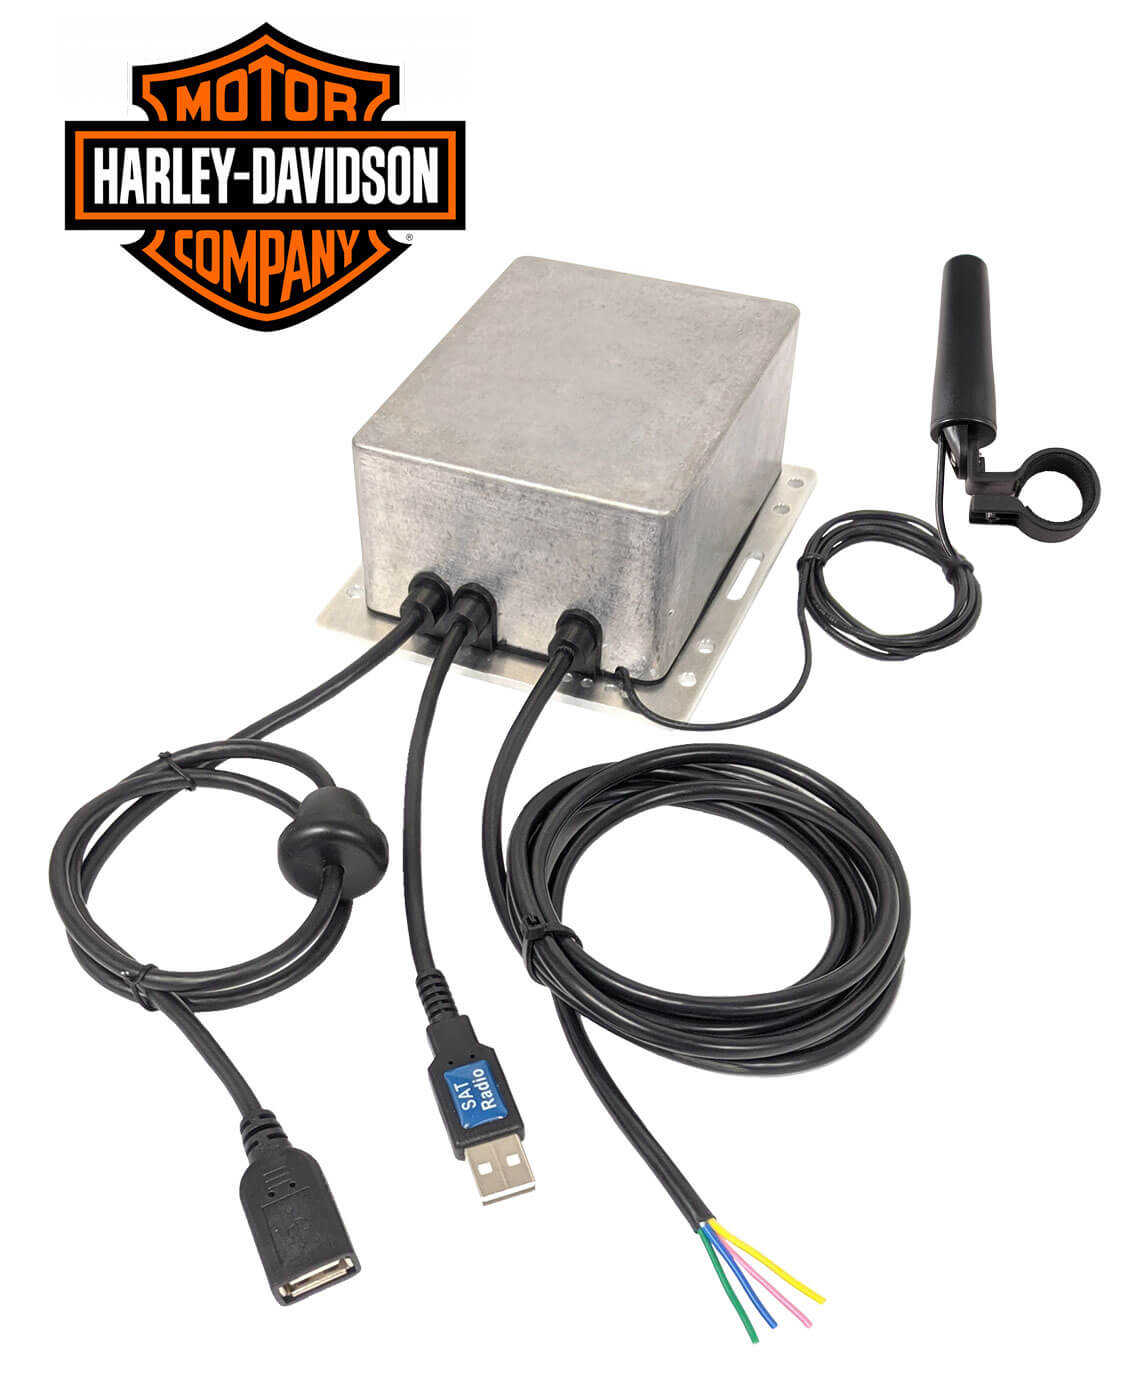 Harley Davidson Sirius XM Radio Installation Kit with Motorcycle Antenna